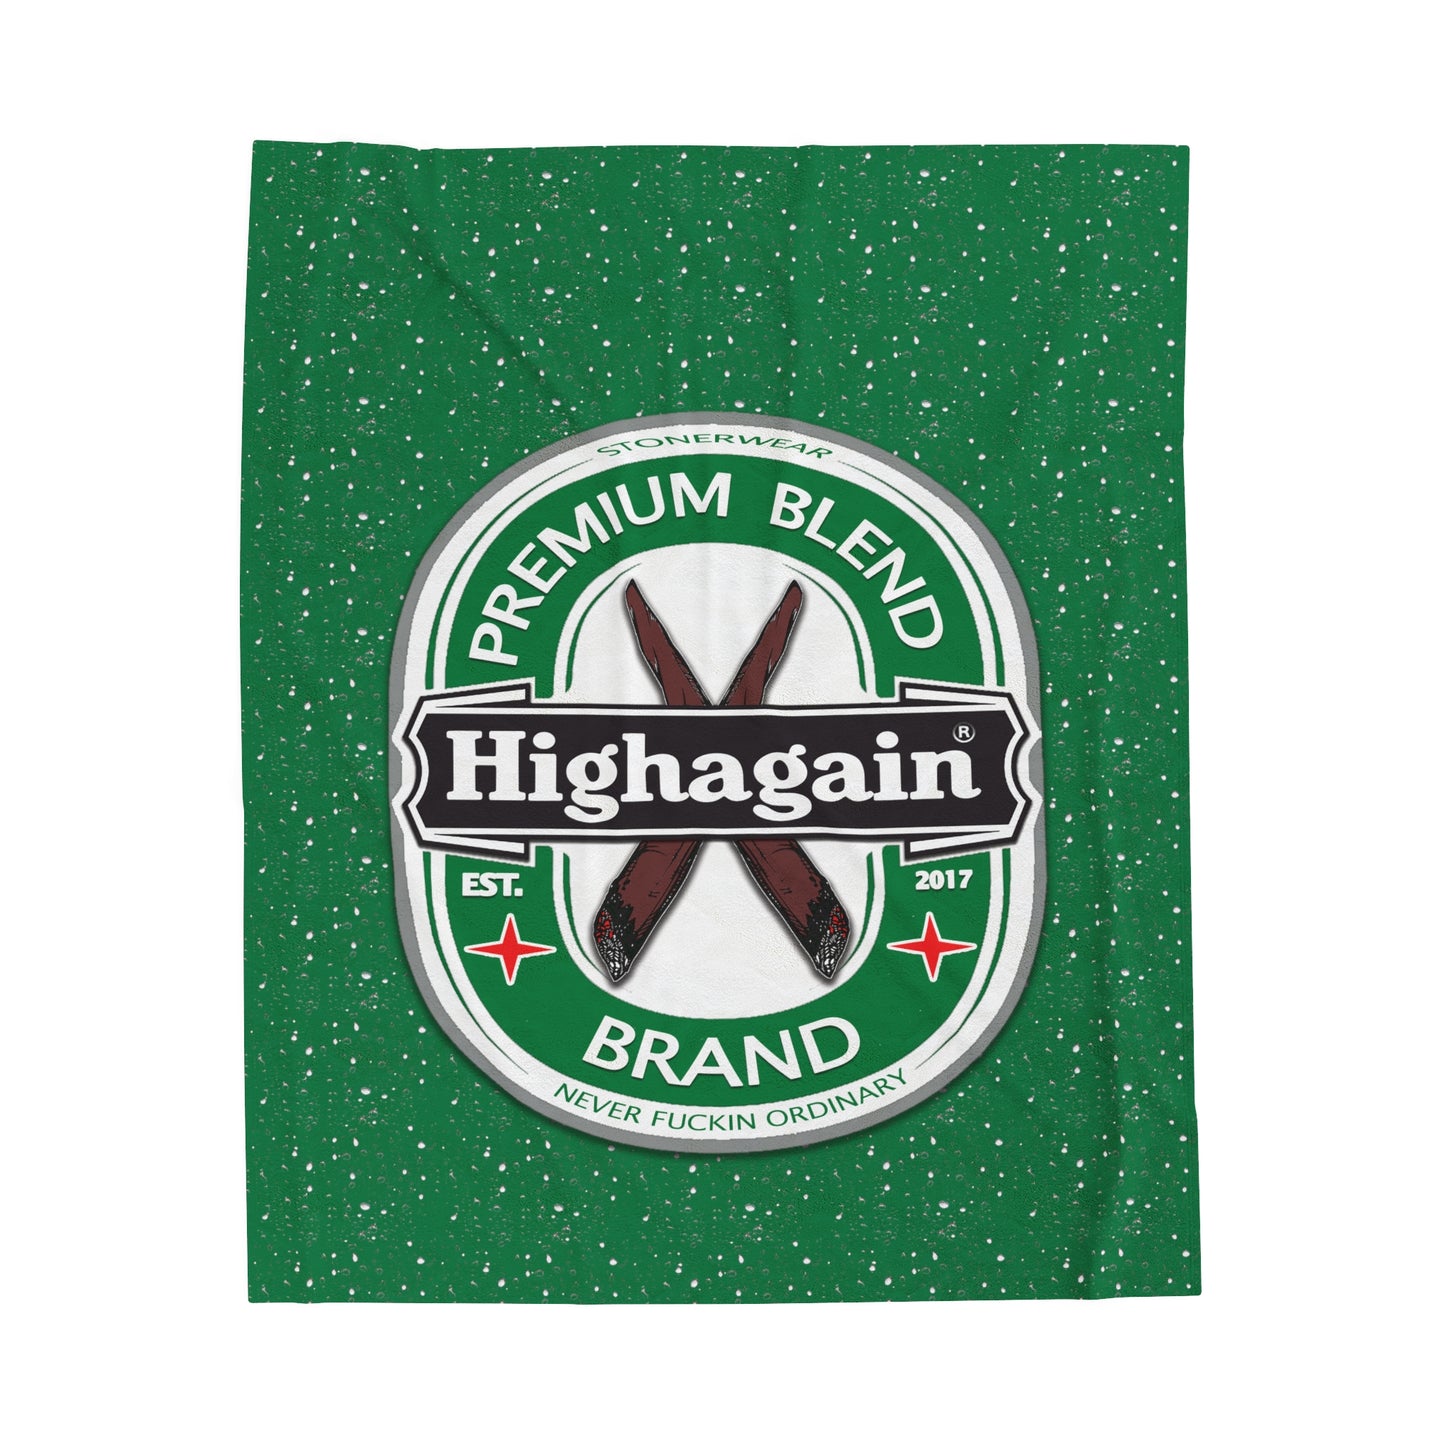 Premium Blend Brand Highagain Plush Blanket